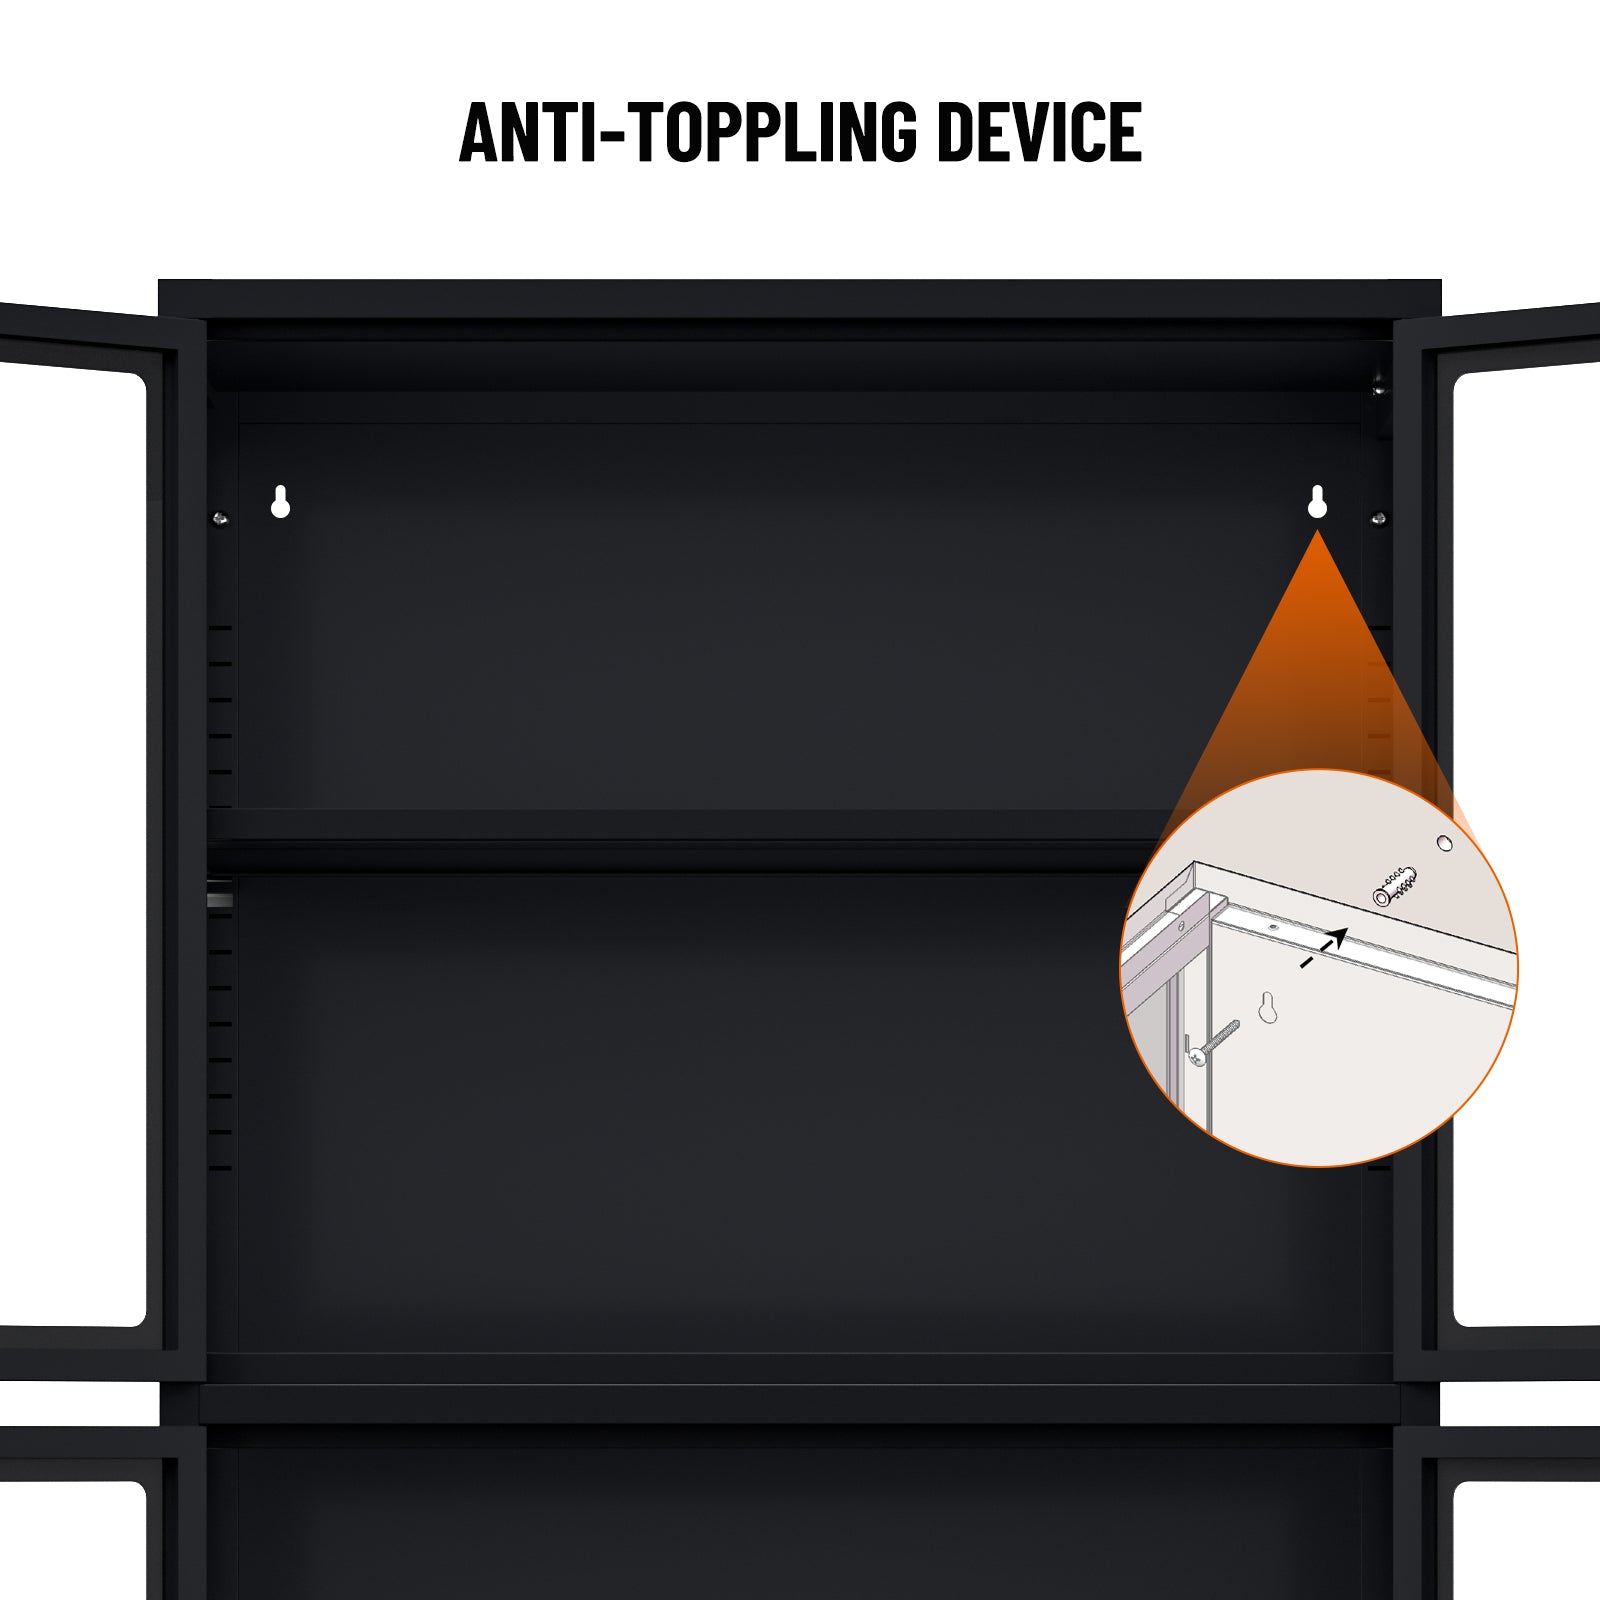 Four Glass Door Storage Cabinet With Adjustable -